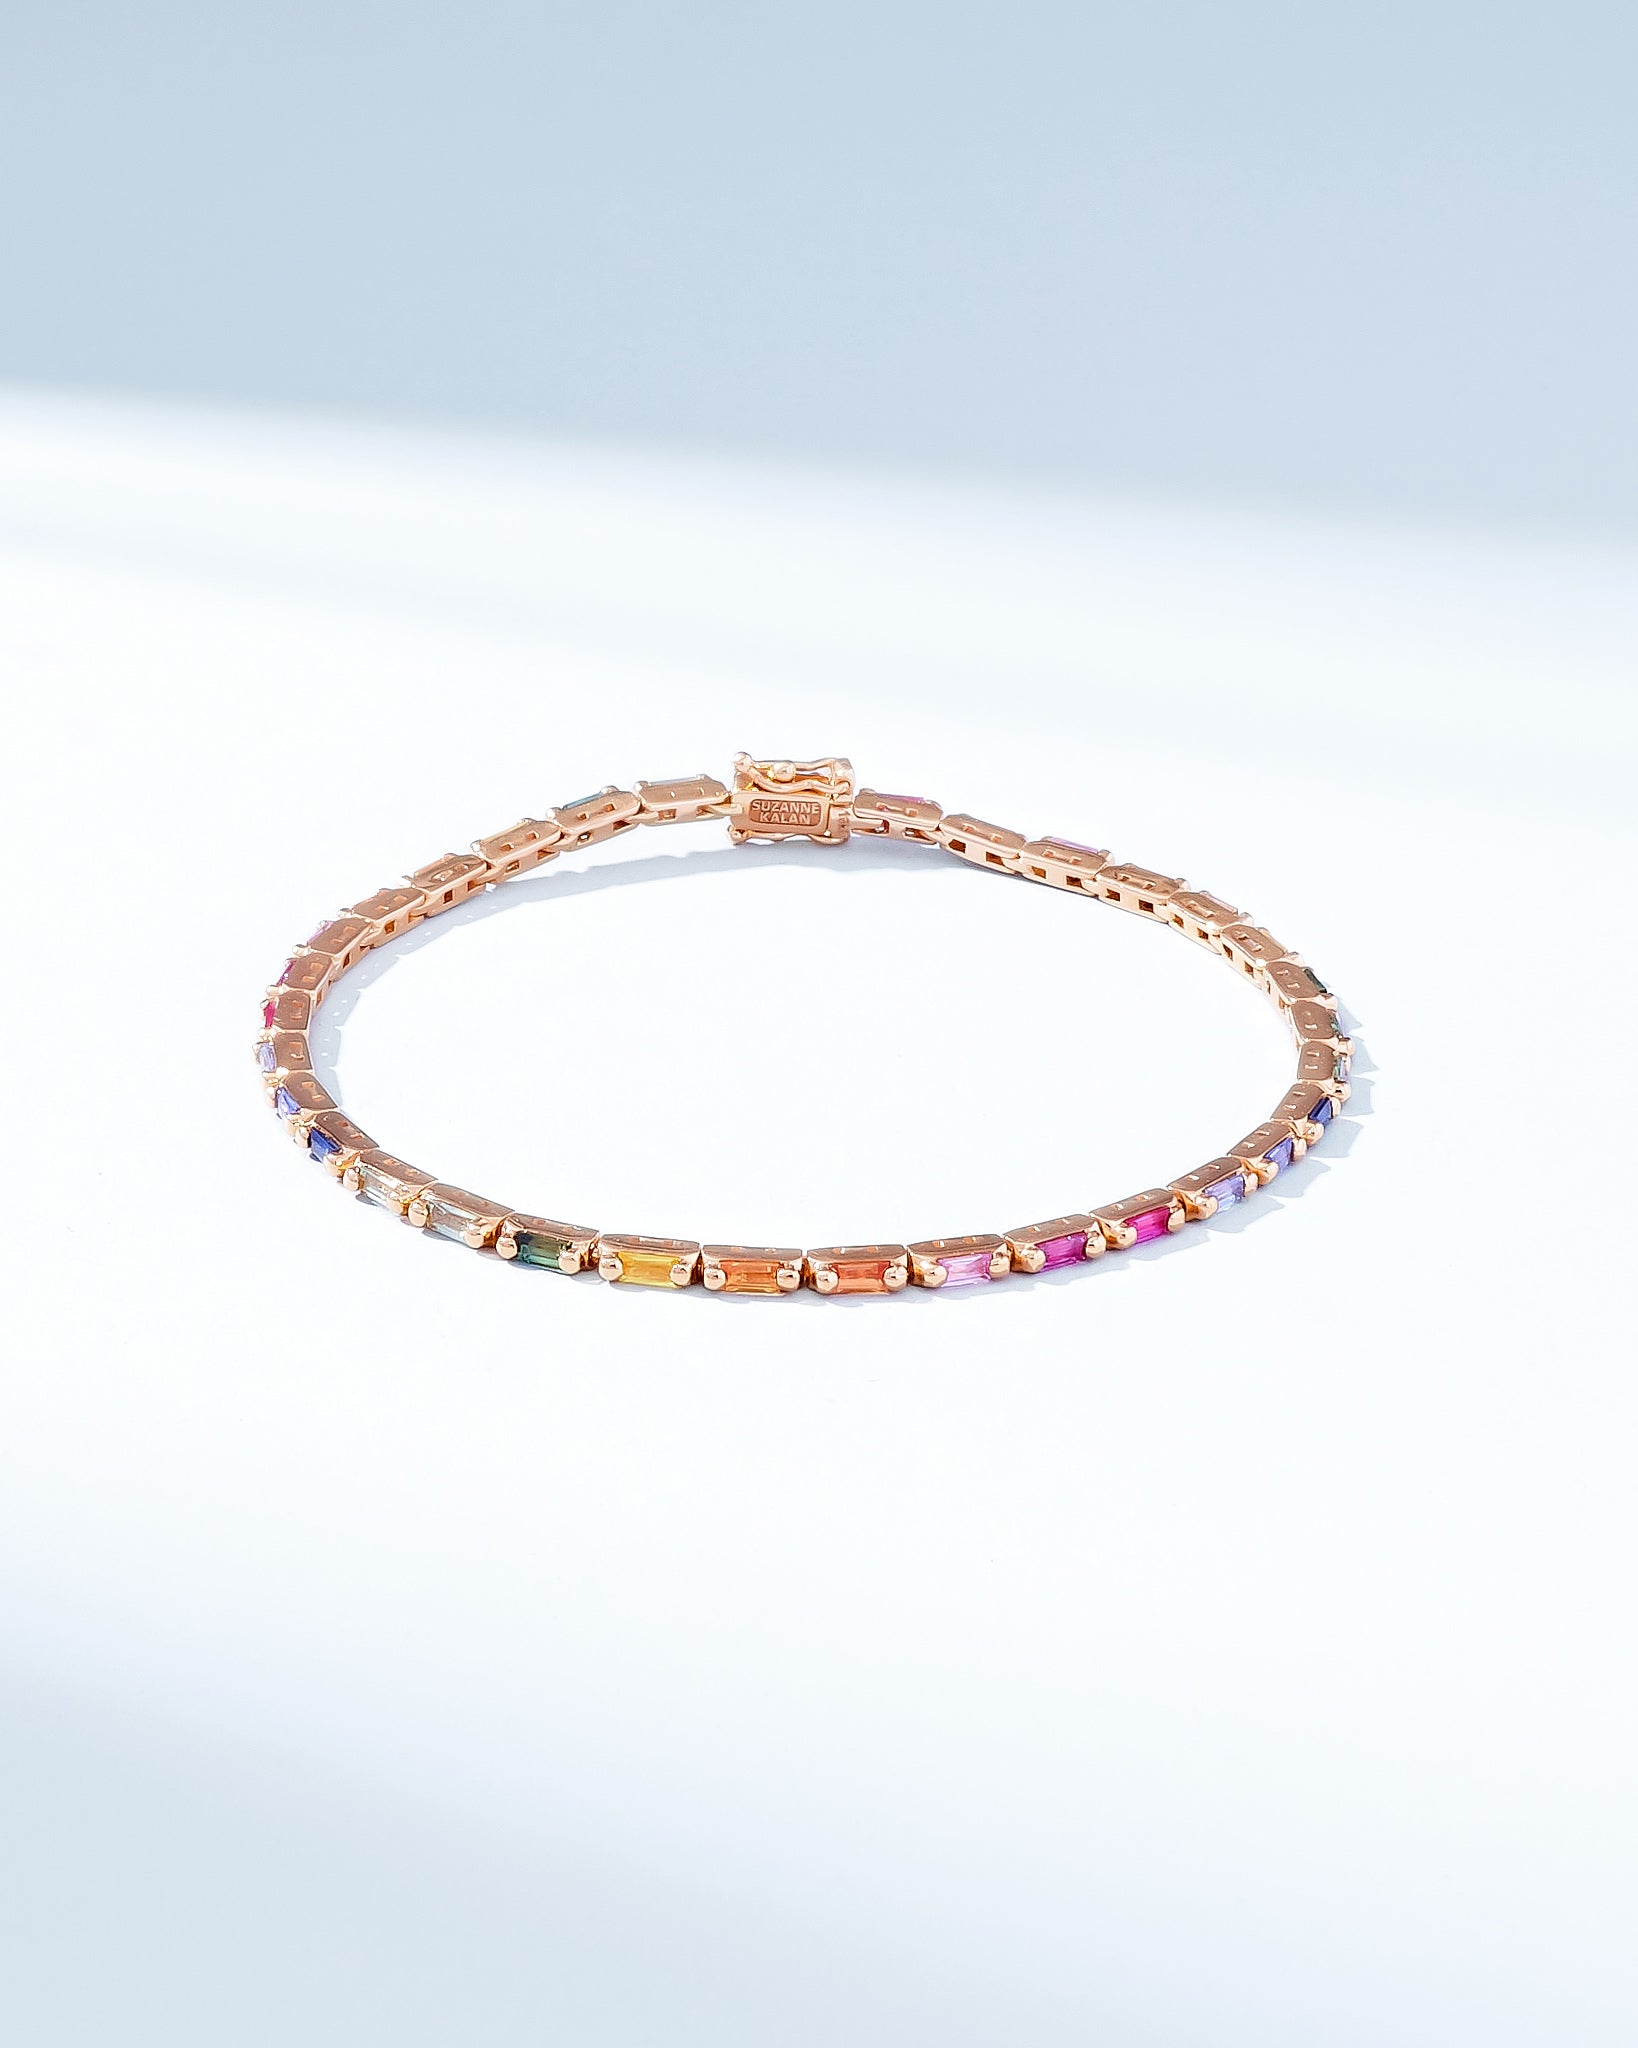 Suzanne Kalan Linear Rainbow Sapphire Tennis Bracelet in 18k rose gold